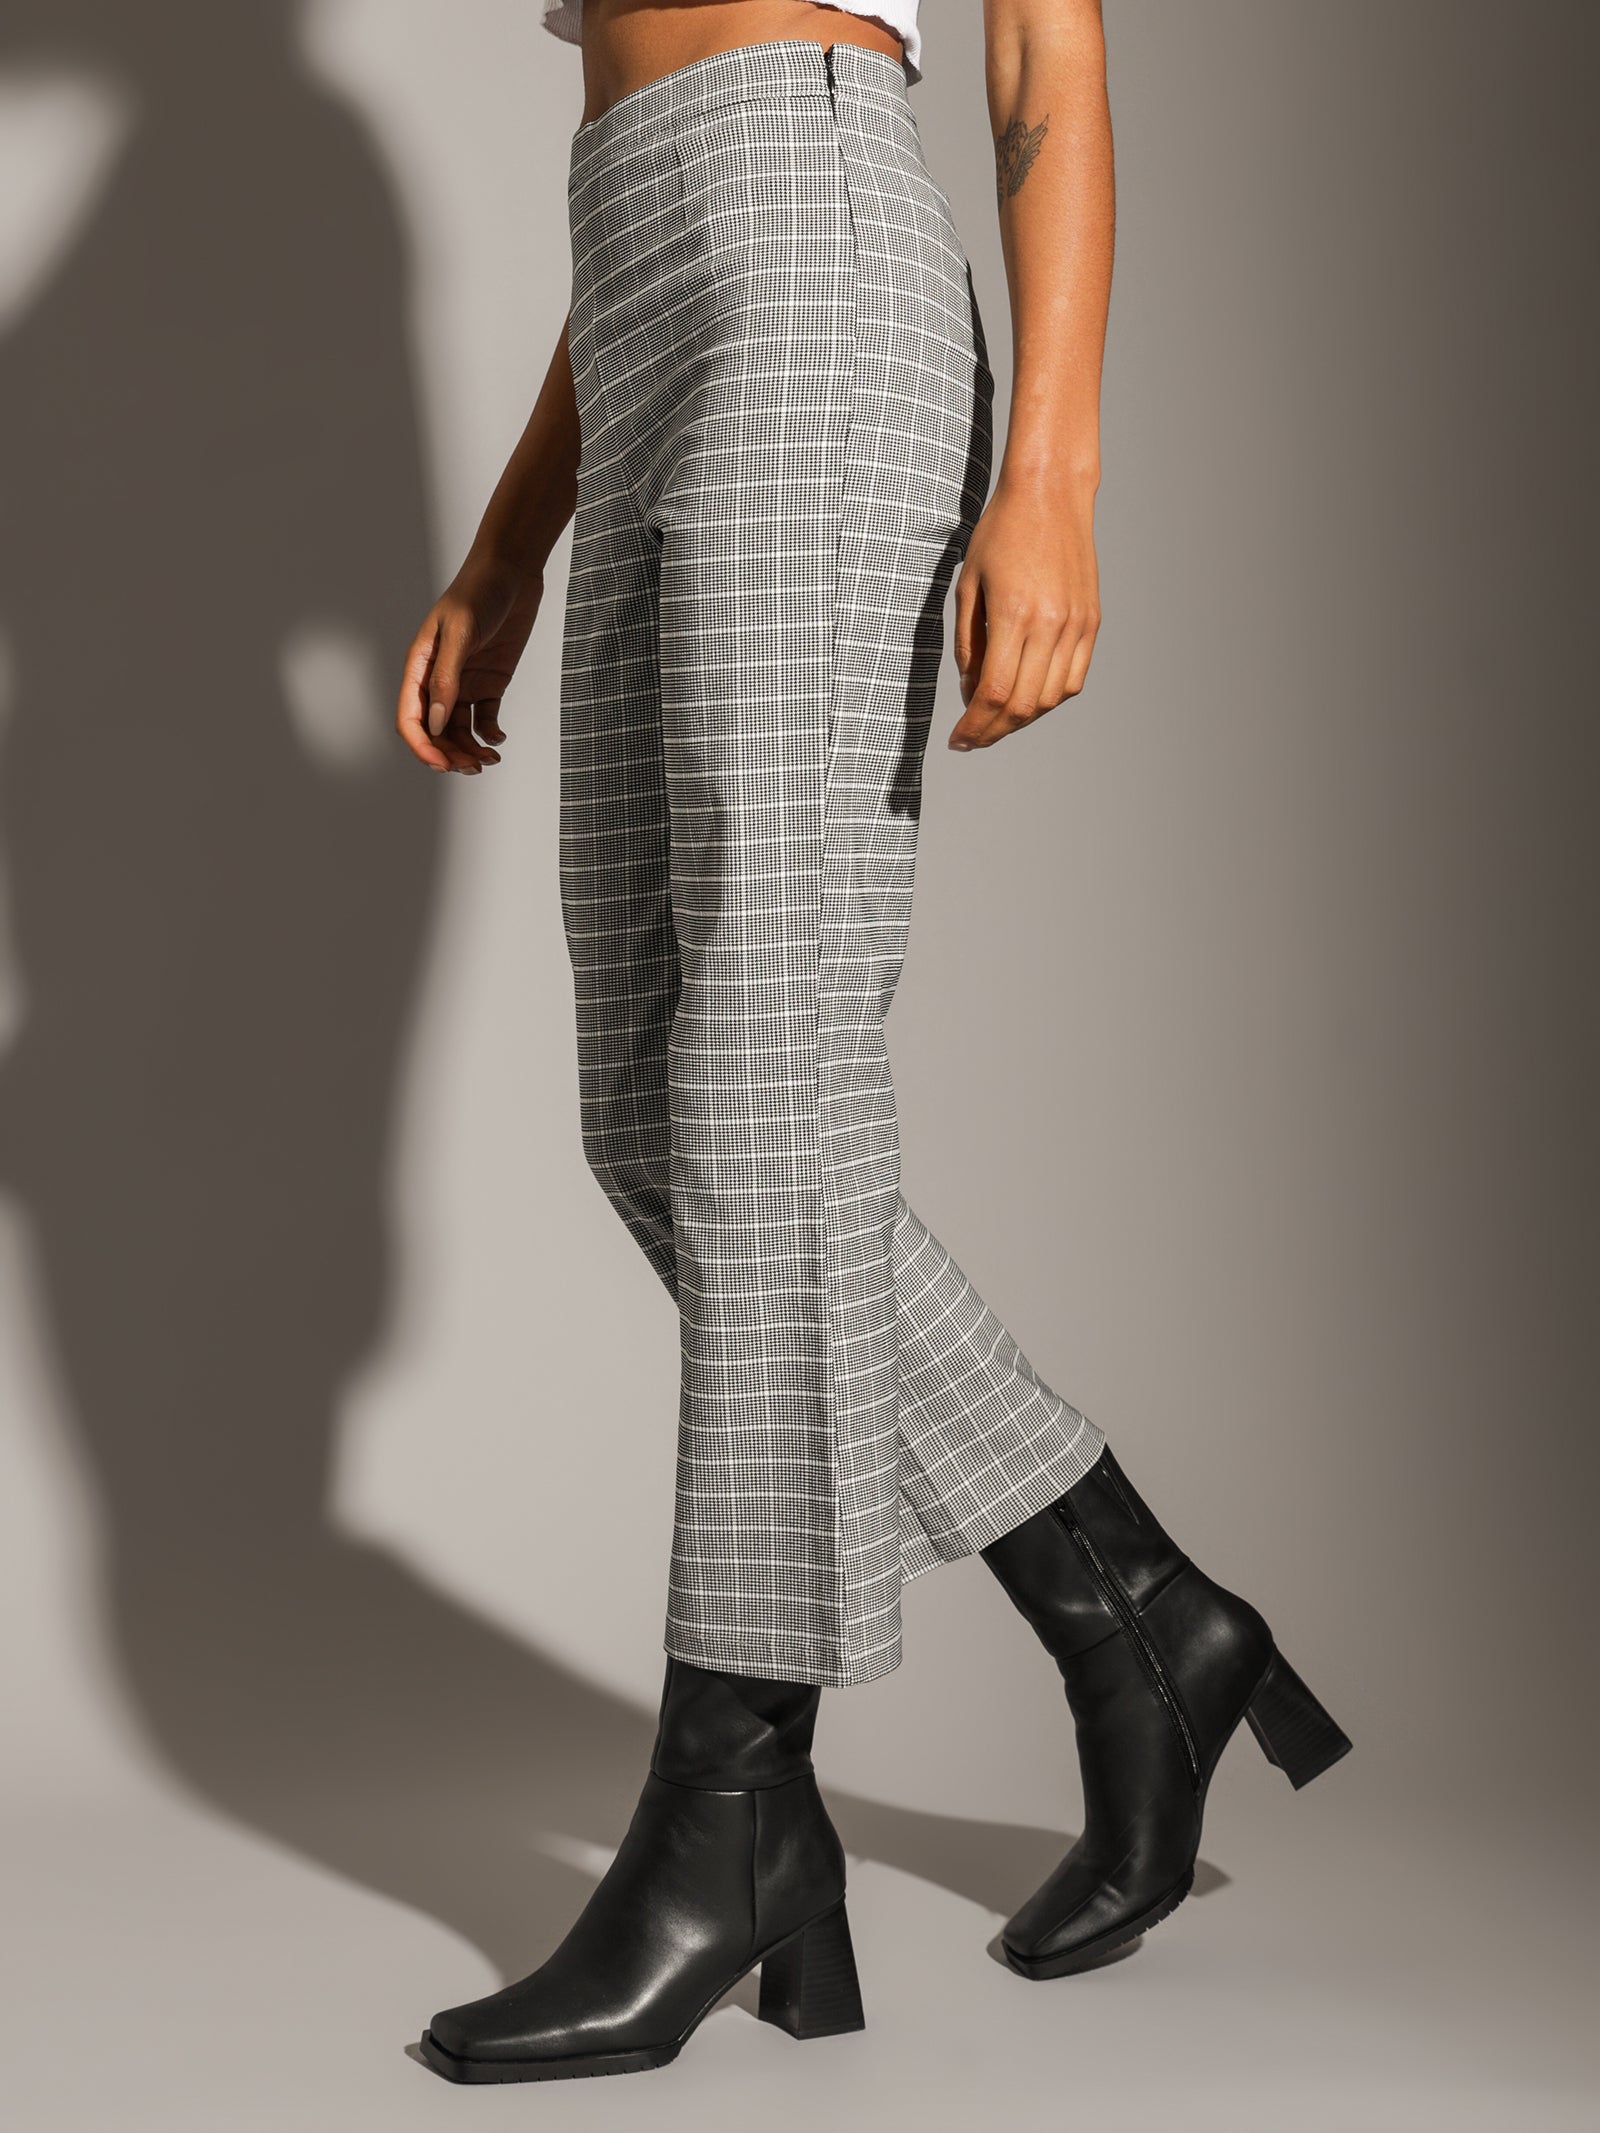 Buy the Zara Cuffed Plaid Pants Women's Size XS